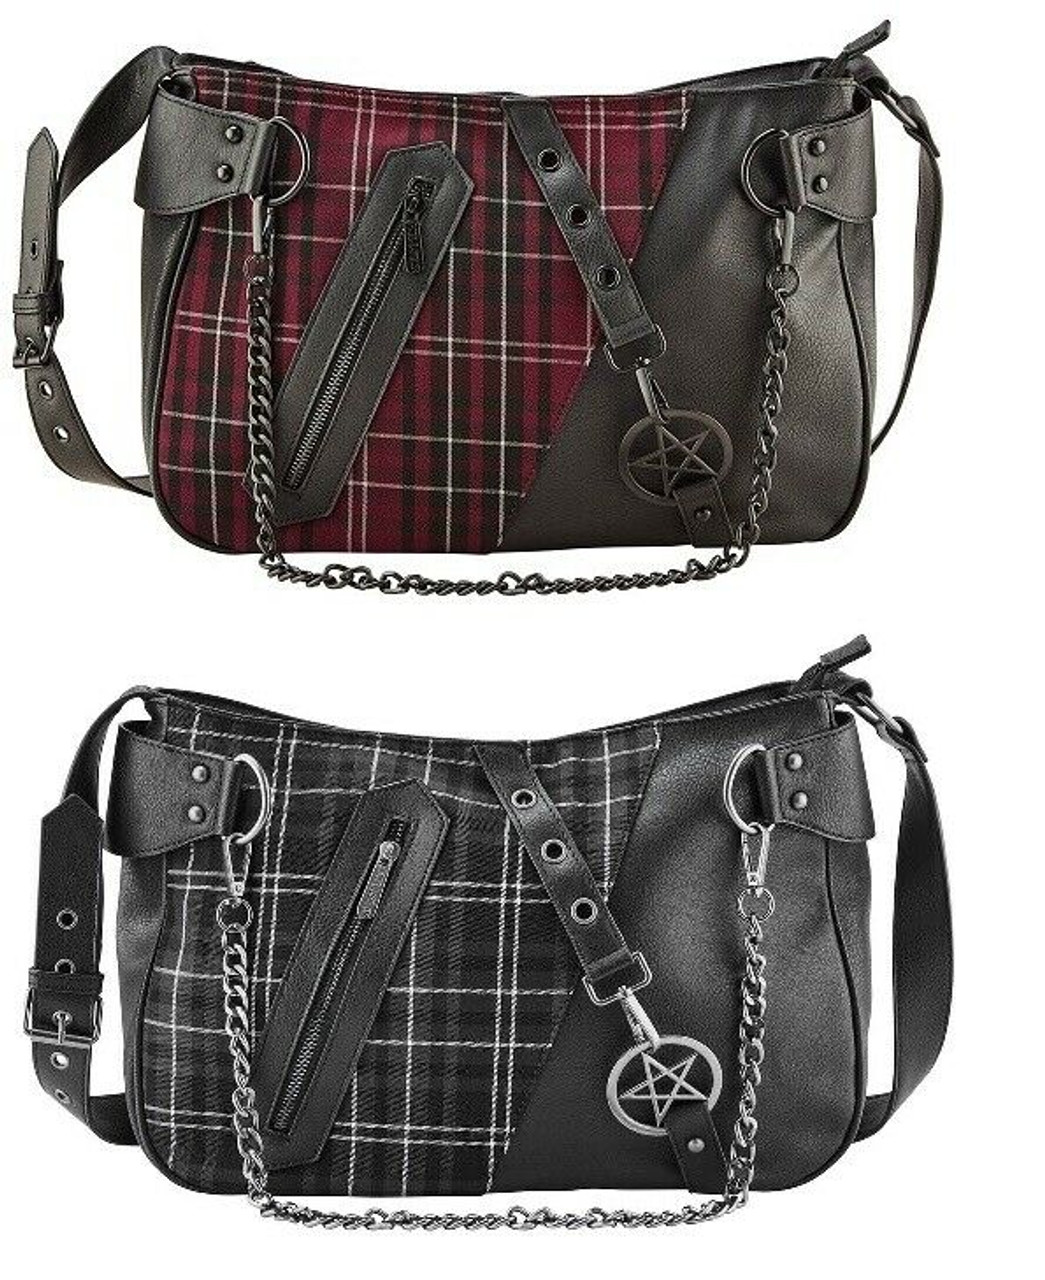 Killstar Harley Chain Pentagram Tartan Gothic Punk Purse Shoulder Bag KSRA003939 - Blood Tartan